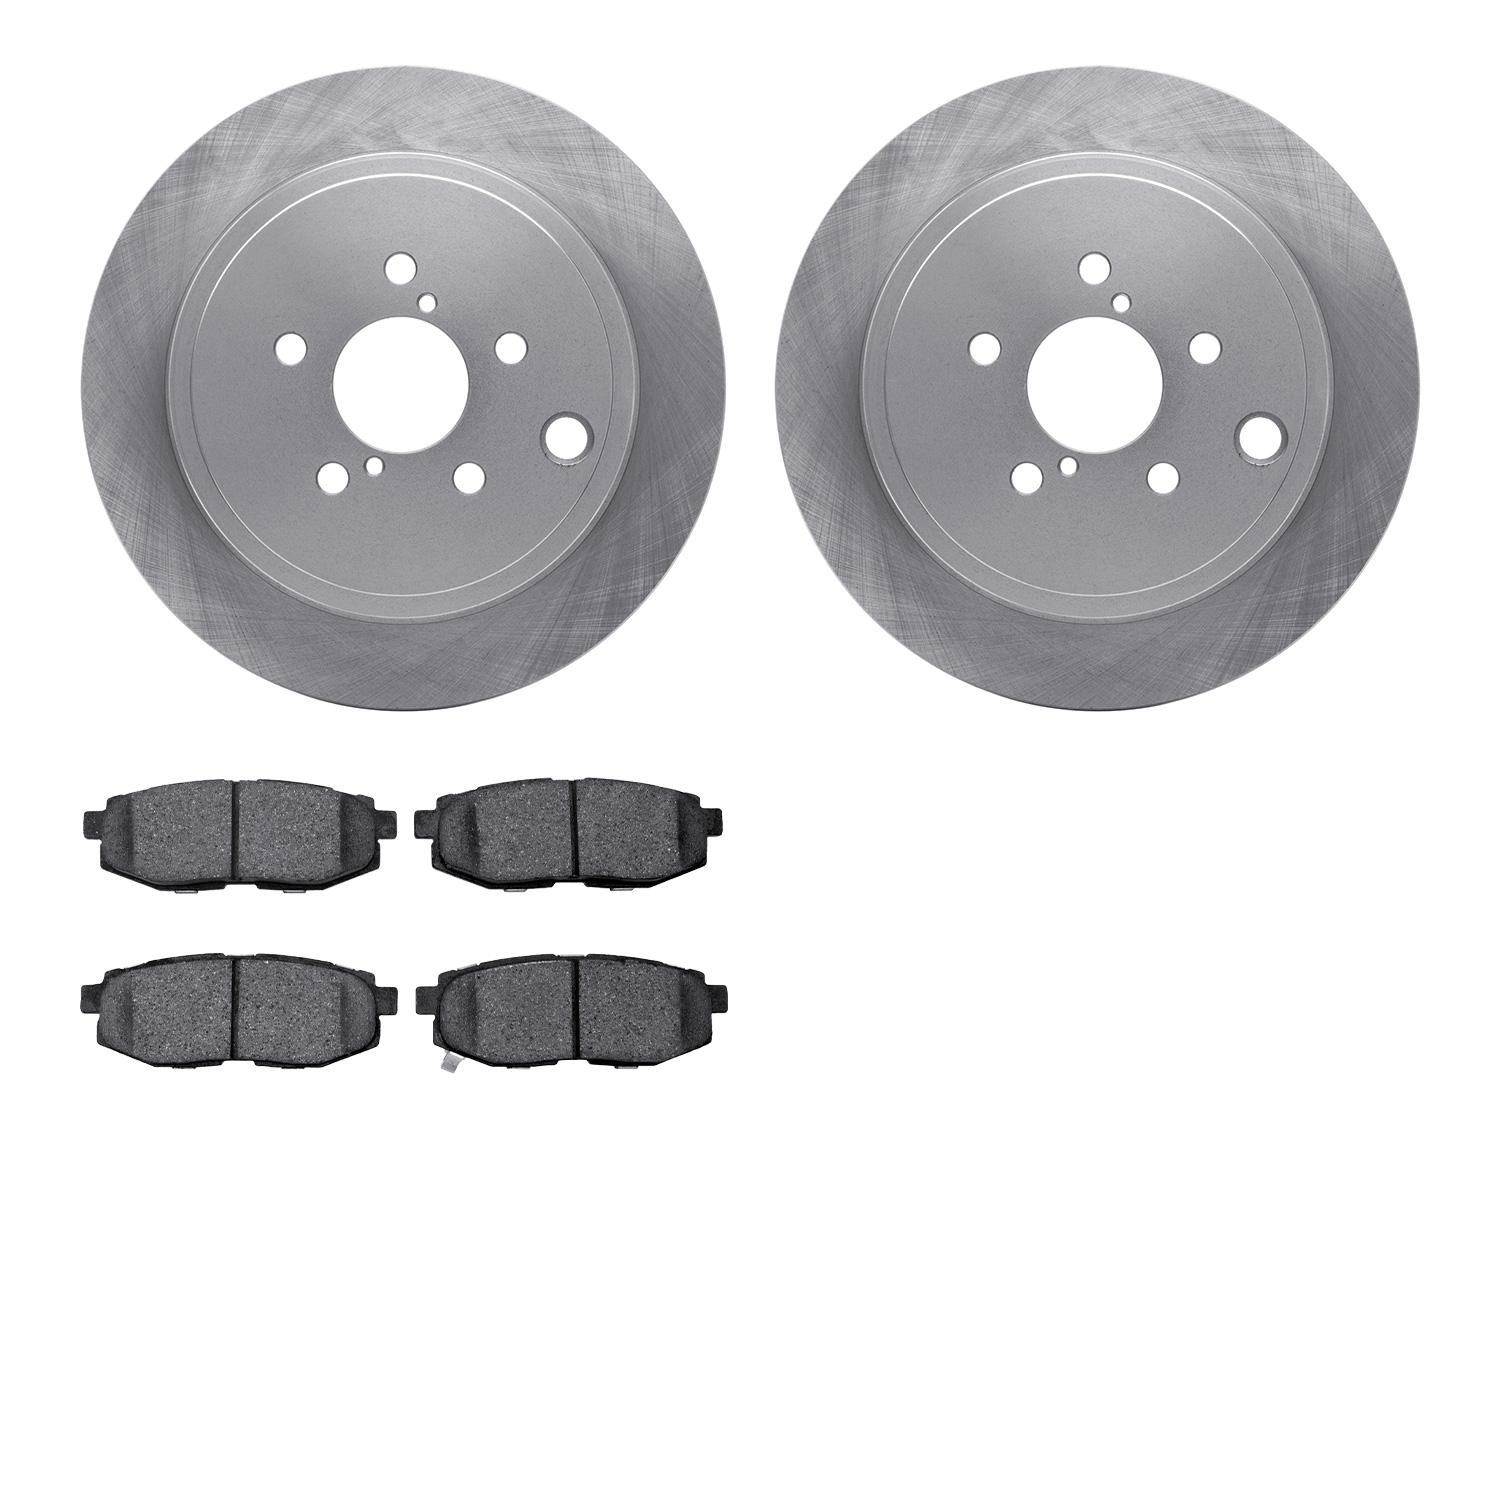 6302-13044 Brake Rotors with 3000-Series Ceramic Brake Pads Kit, Fits Select Multiple Makes/Models, Position: Rear